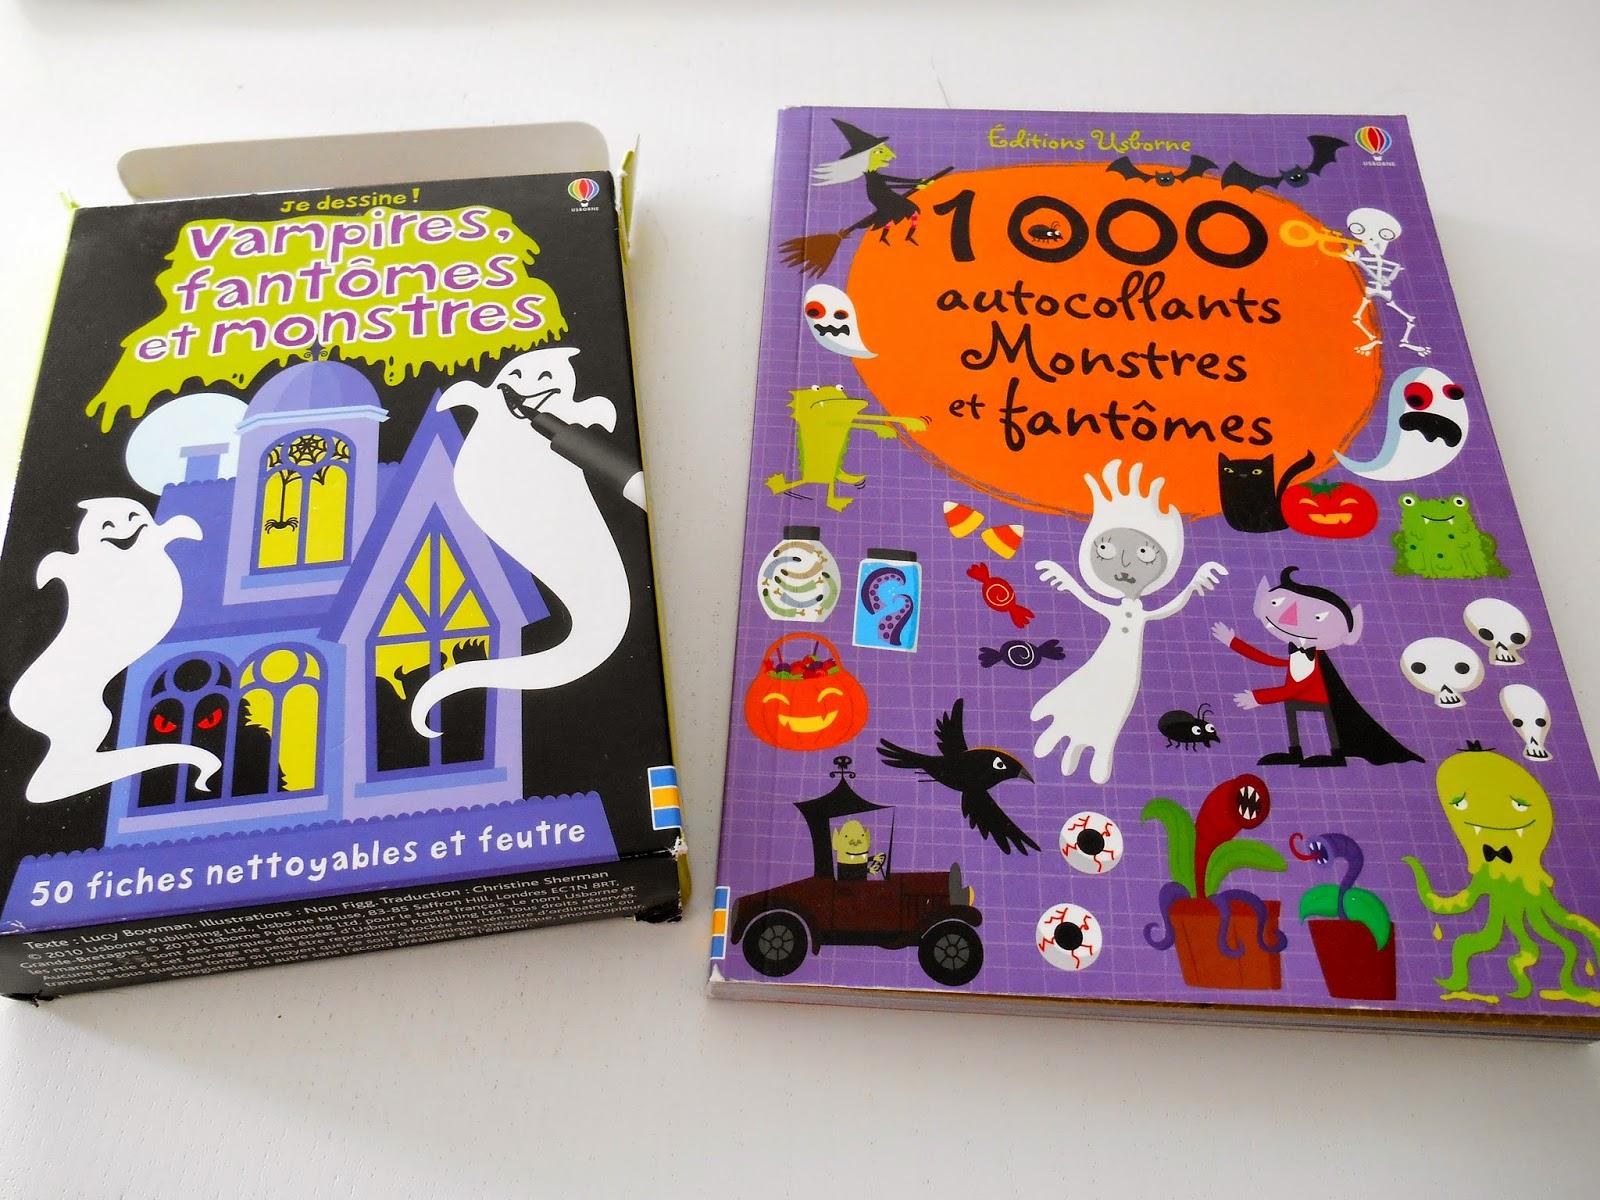 Halloween : on dessine, on colle, on colorie! #1 : Je dessine ! Vampires, fantômes et monstres - 1000 autocollants Monstres et fantômes